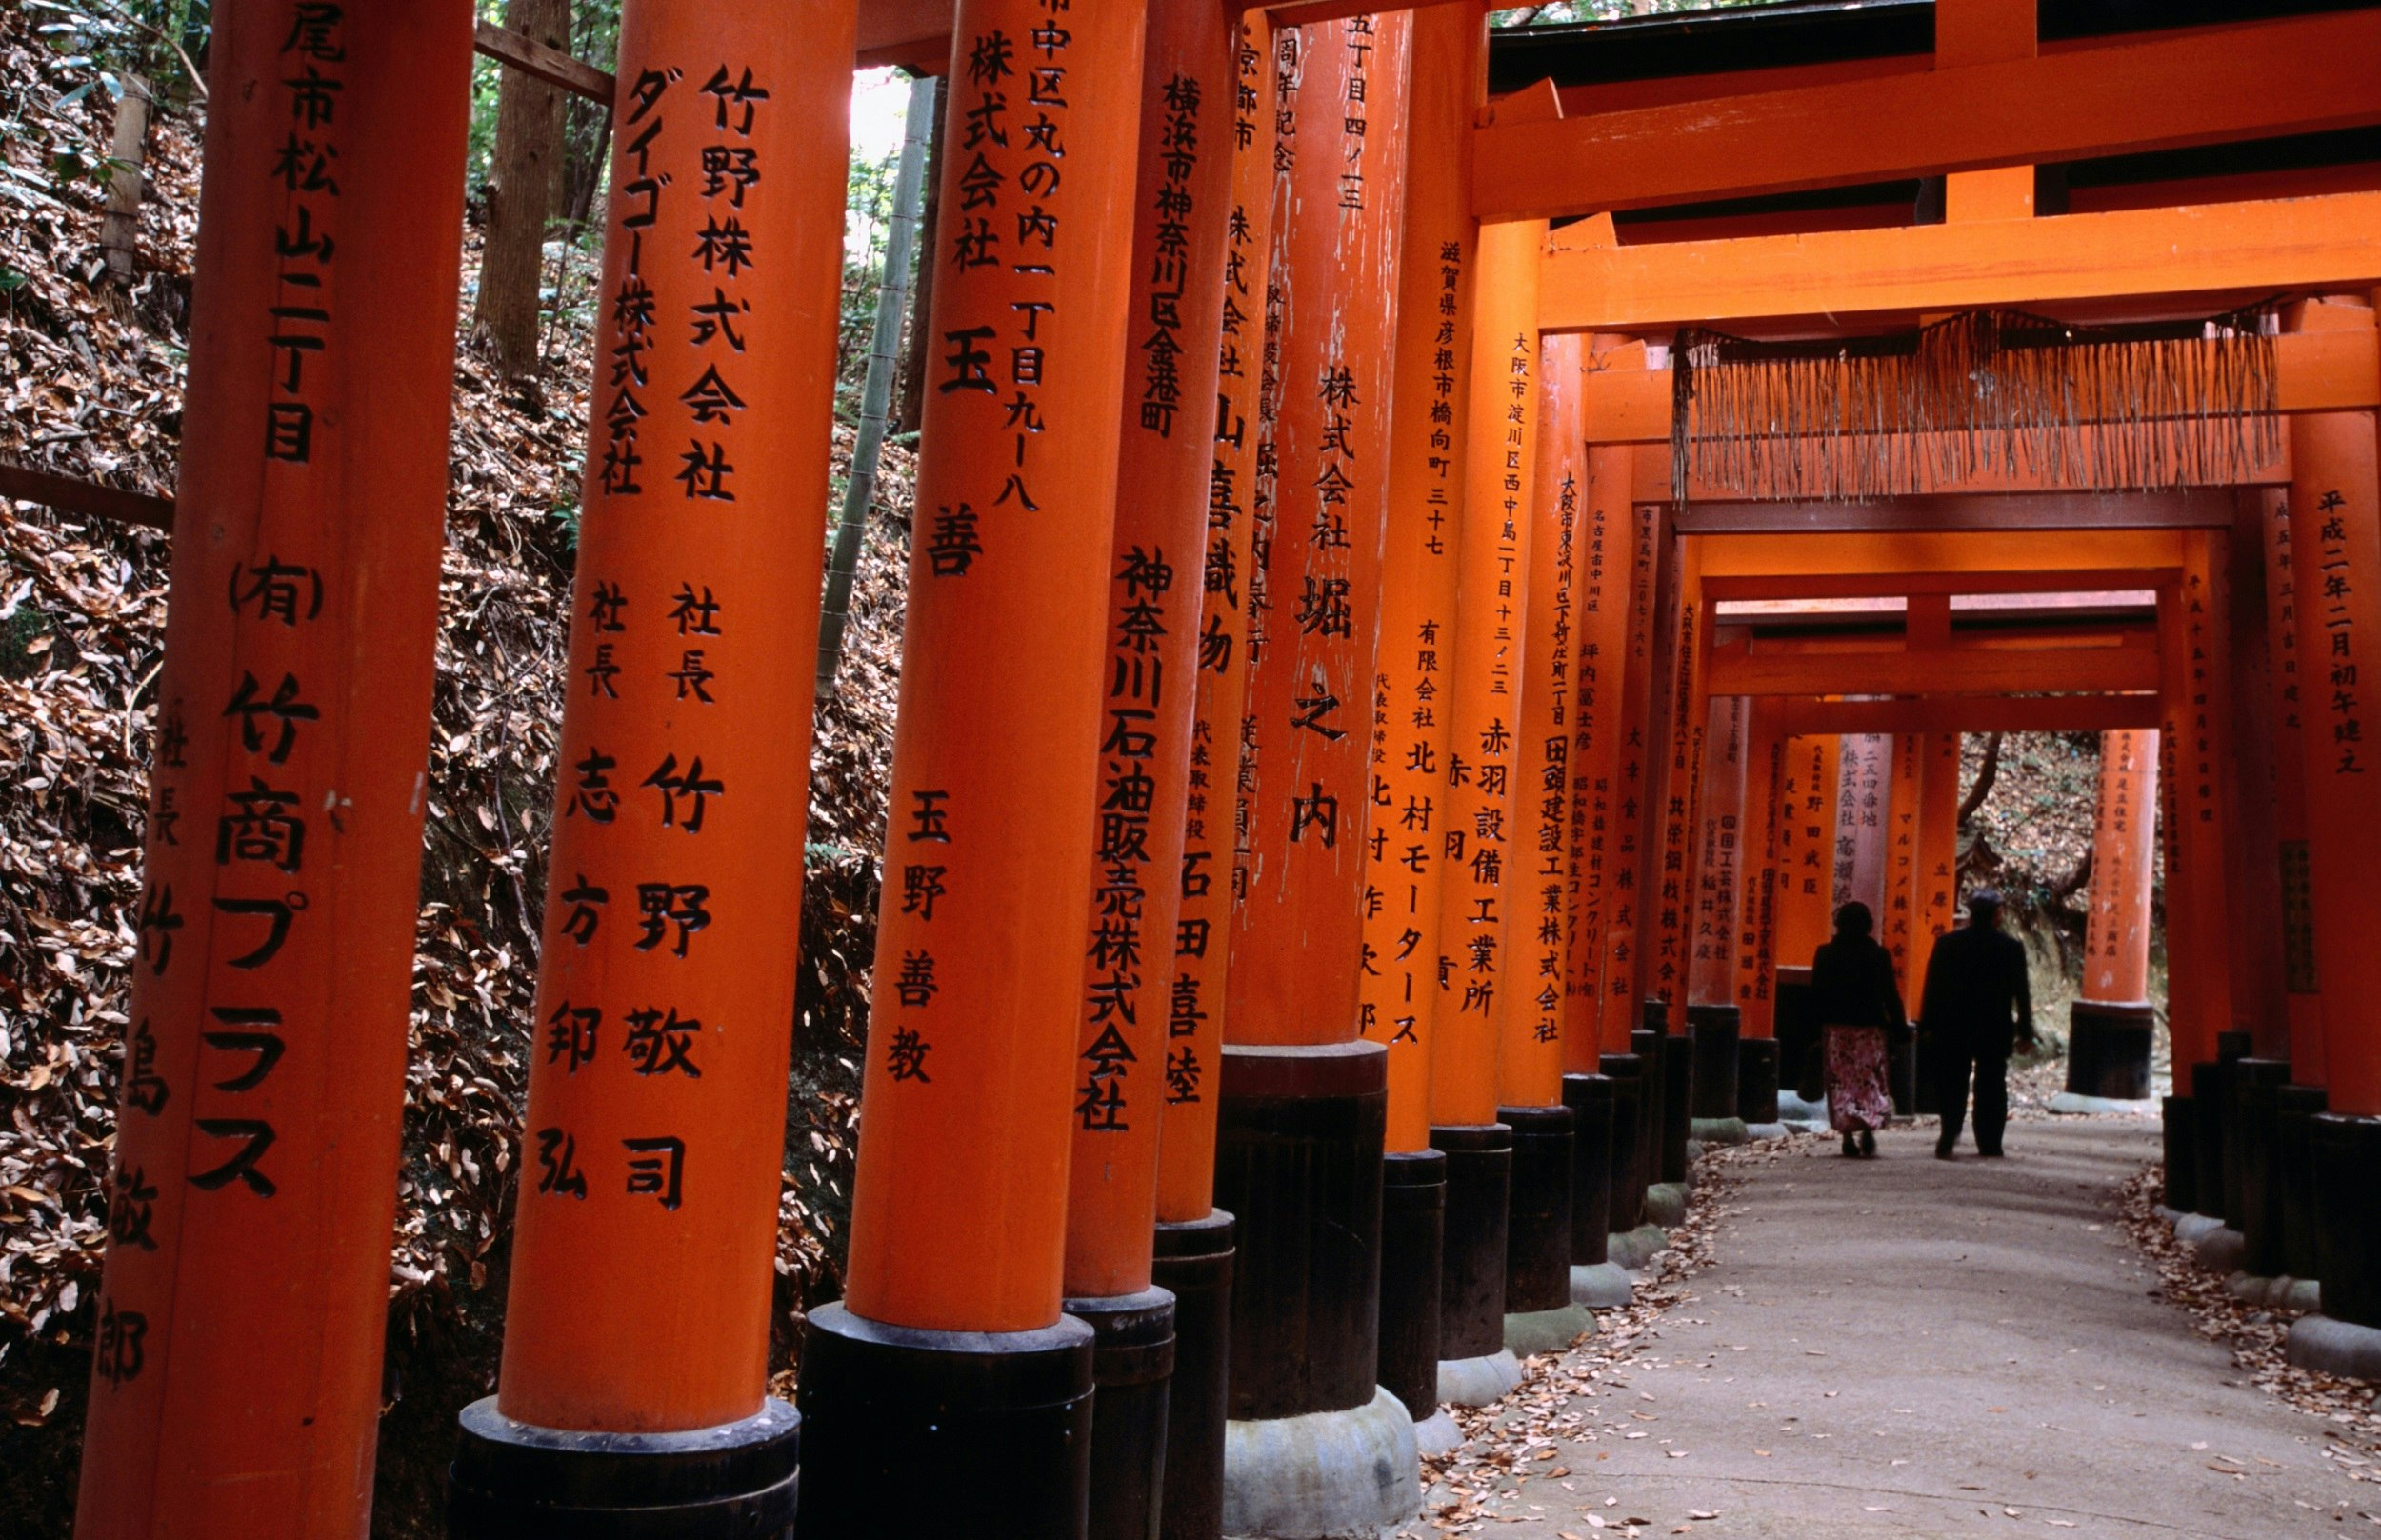 People walking through Fushimi-Inari Taisha 'torii tunnels', which are orange/red in colour.